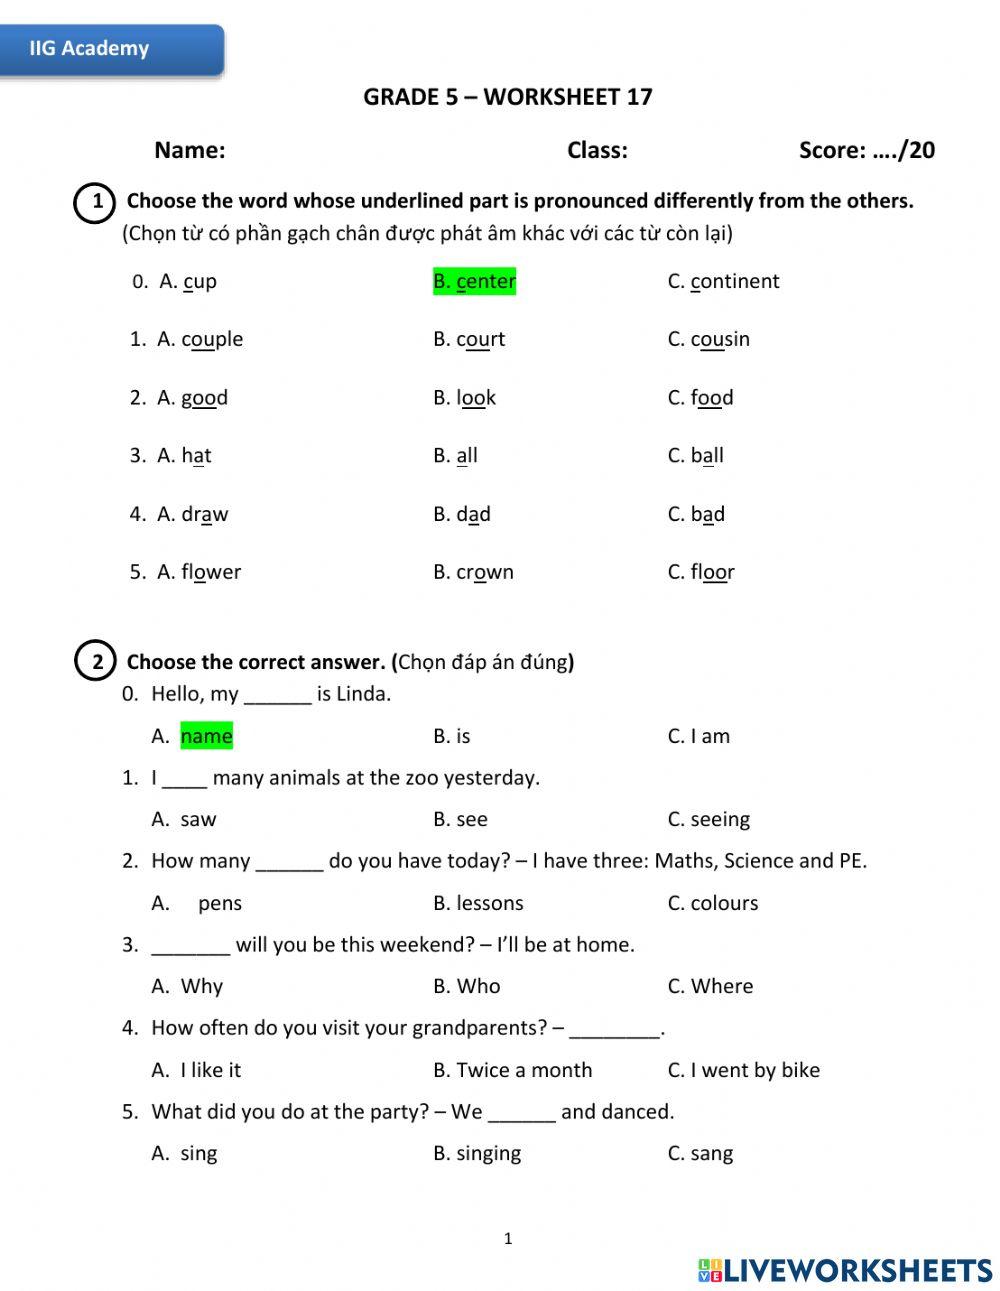 IIG-Grade 5-Worksheet 17